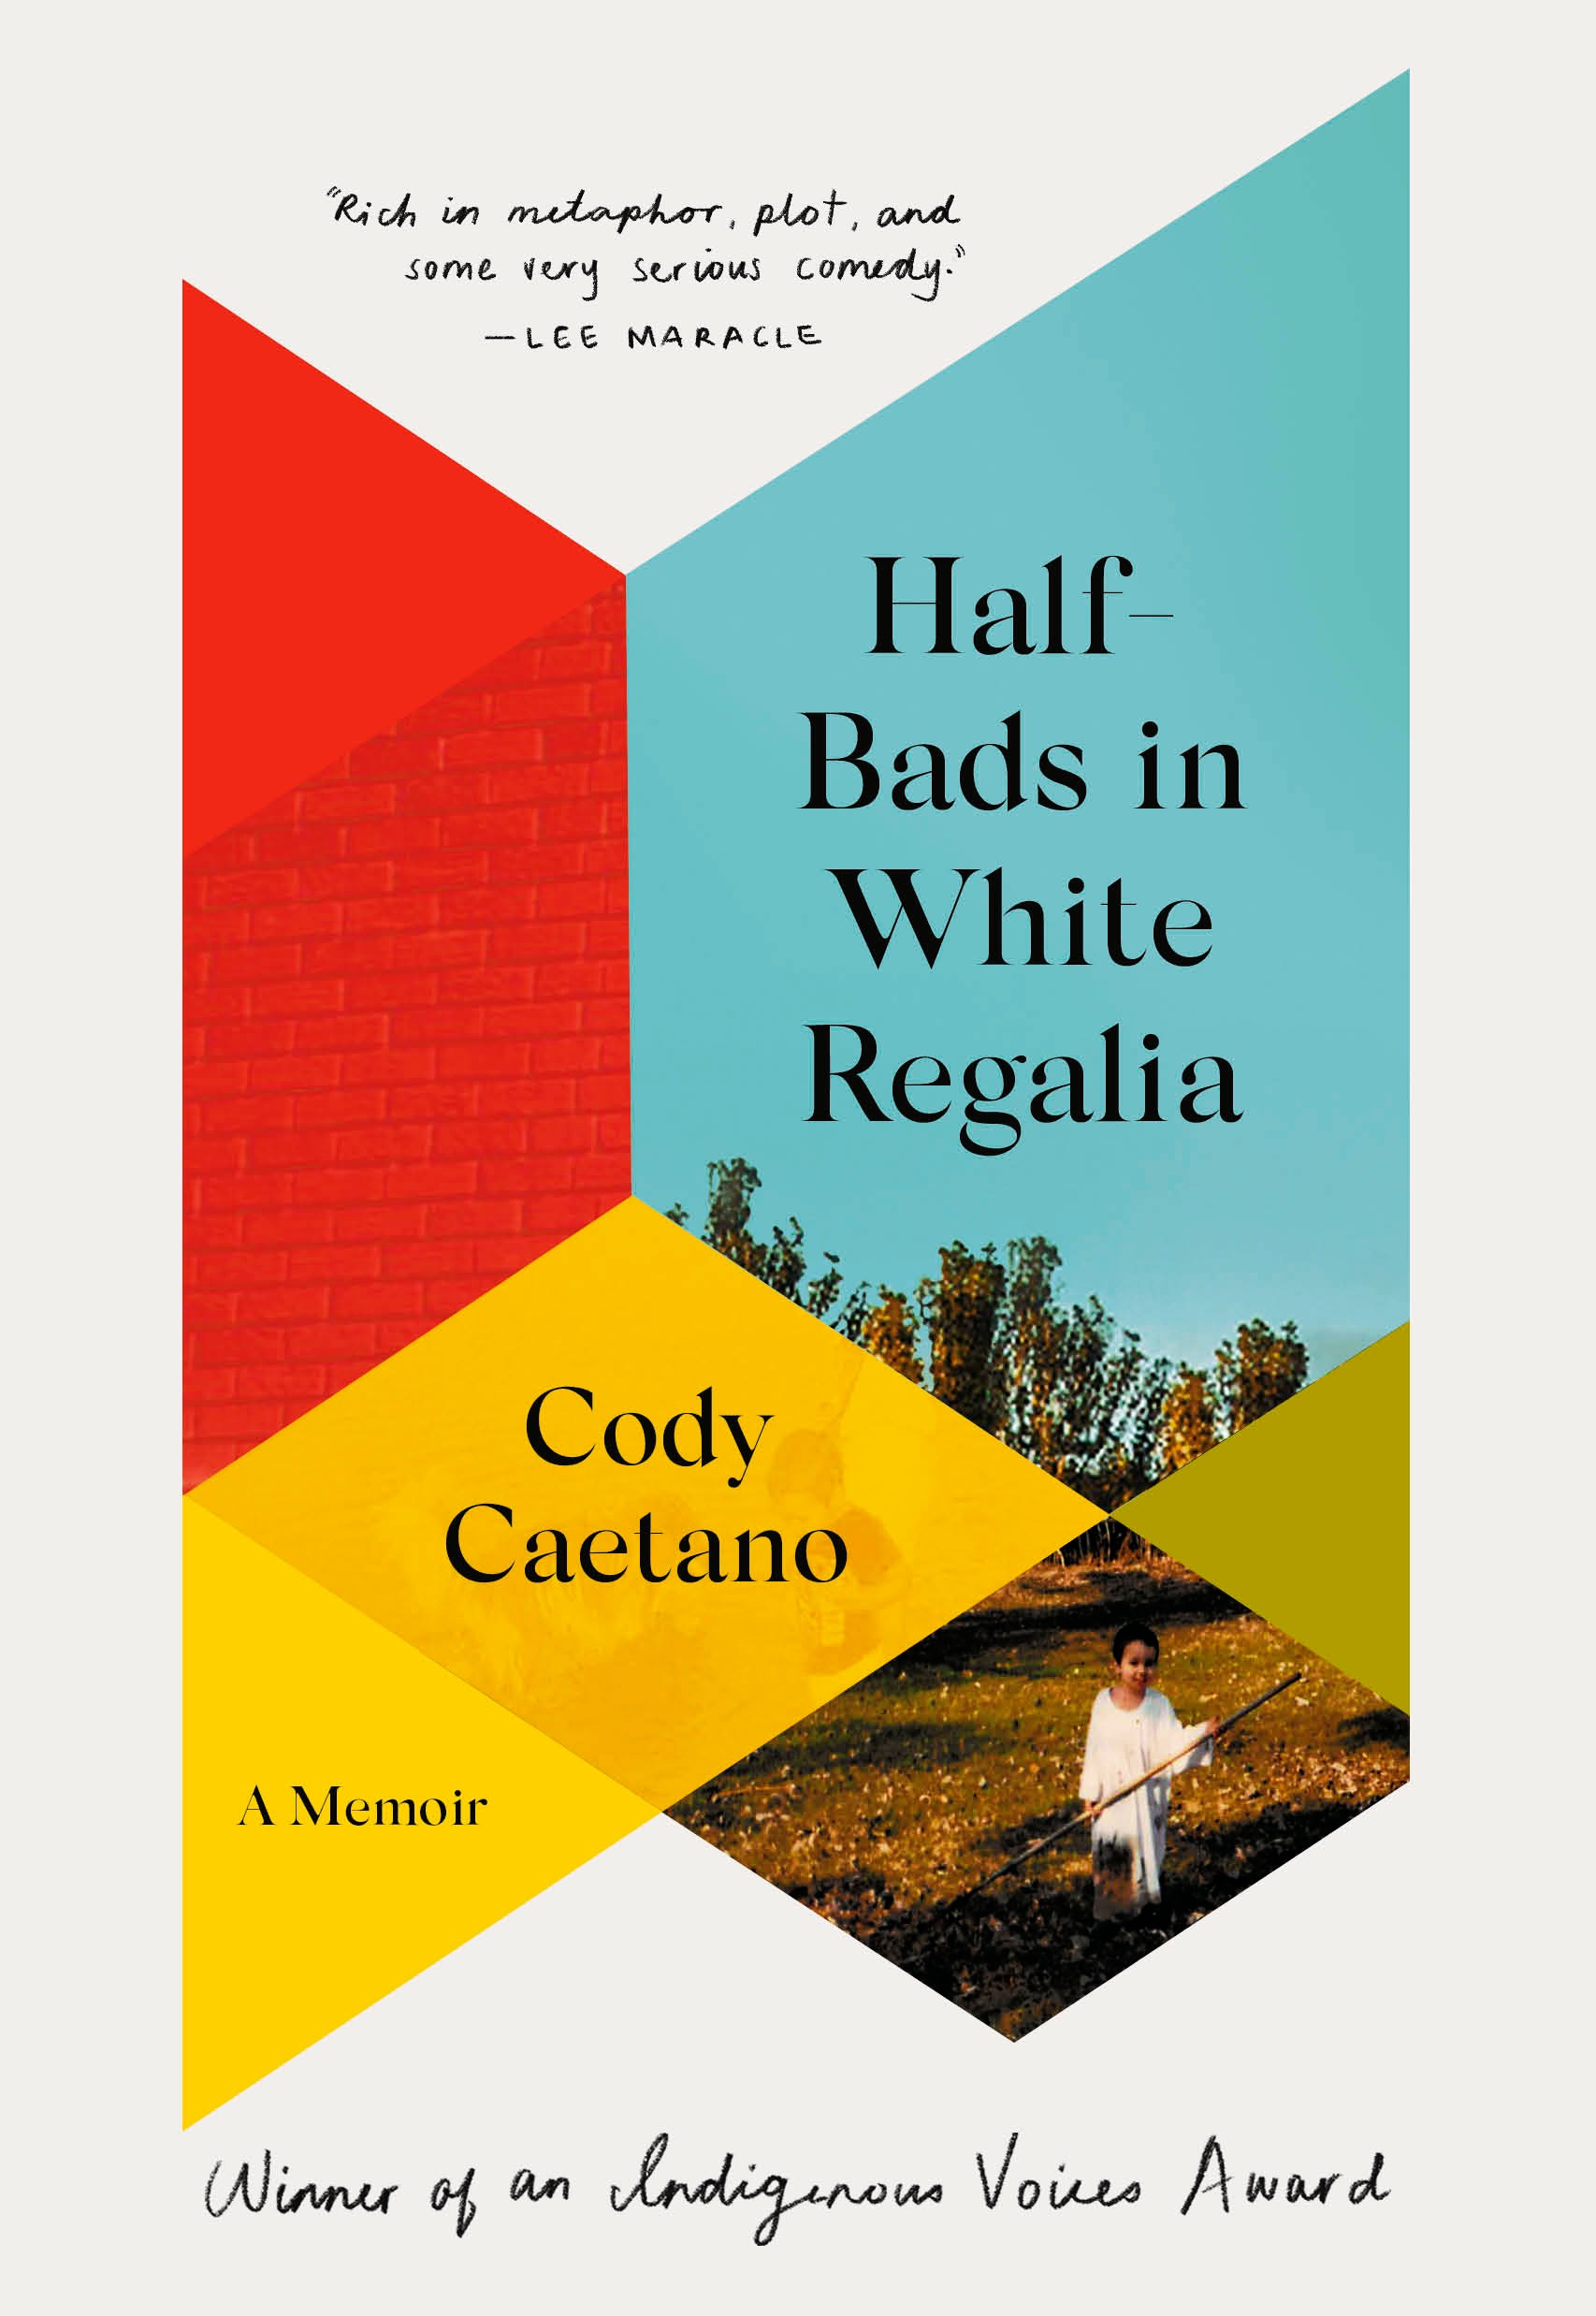 Half-Bads in White Regalia : A Memoir | Biography & Memoir